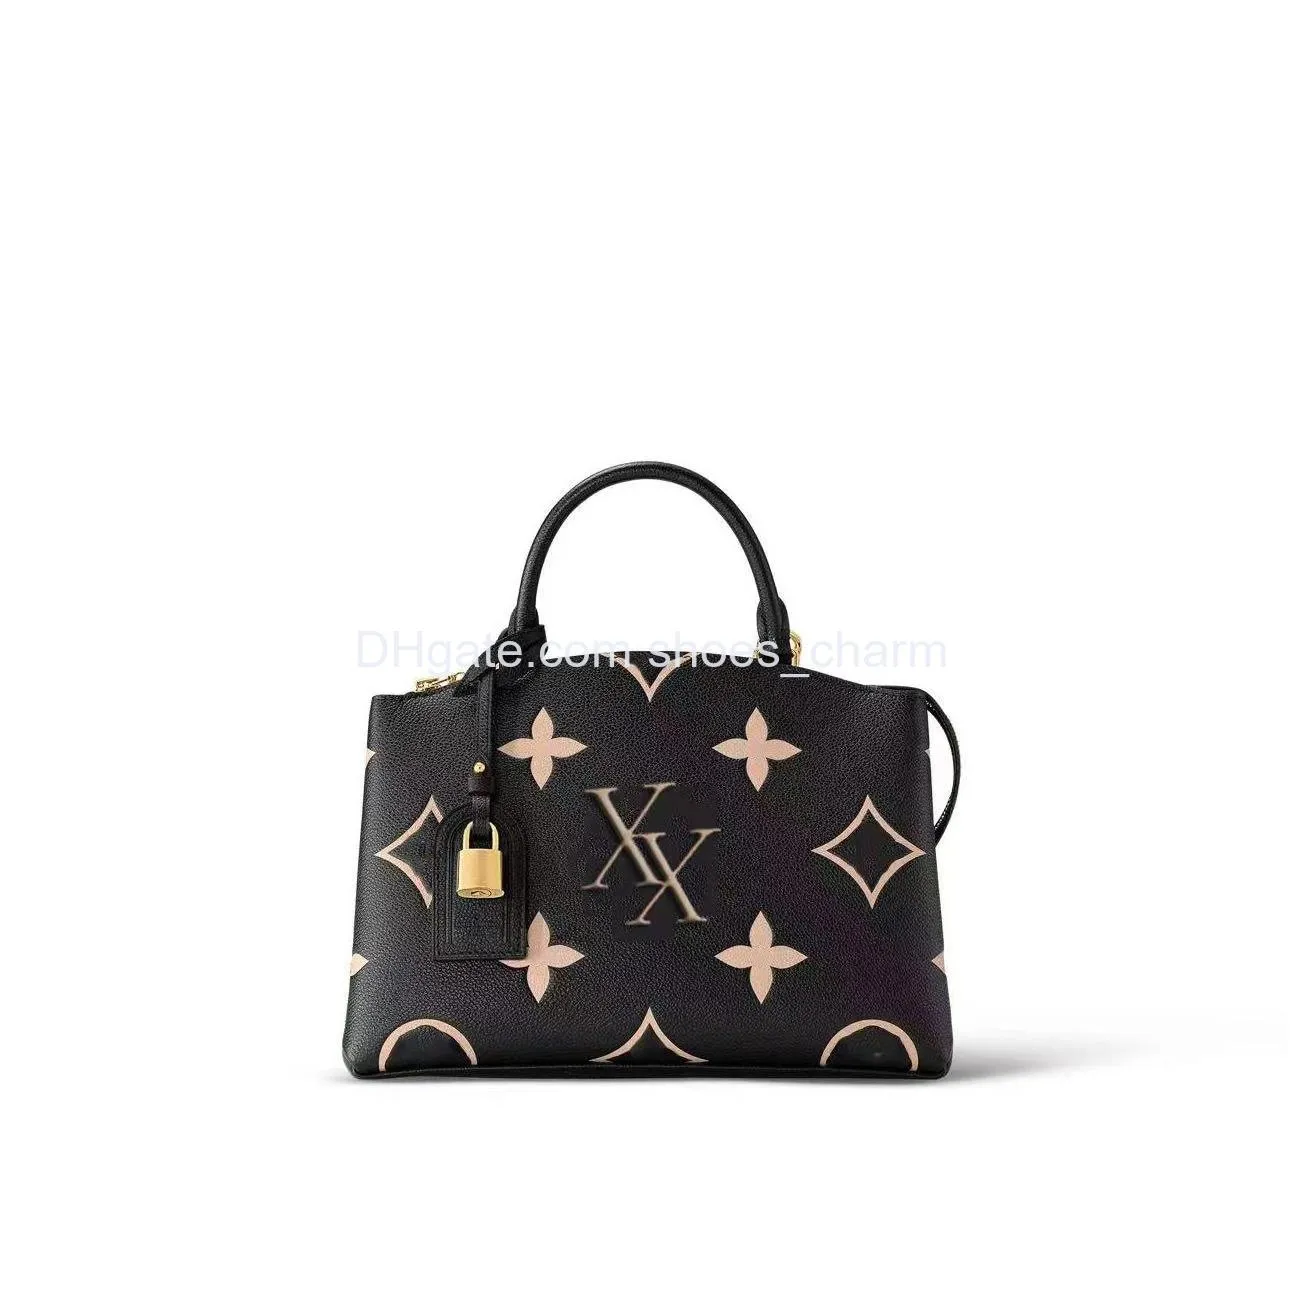 handbag single shoulder crossbody bag petit palais series imported cowhide super large capacity tote lady bag